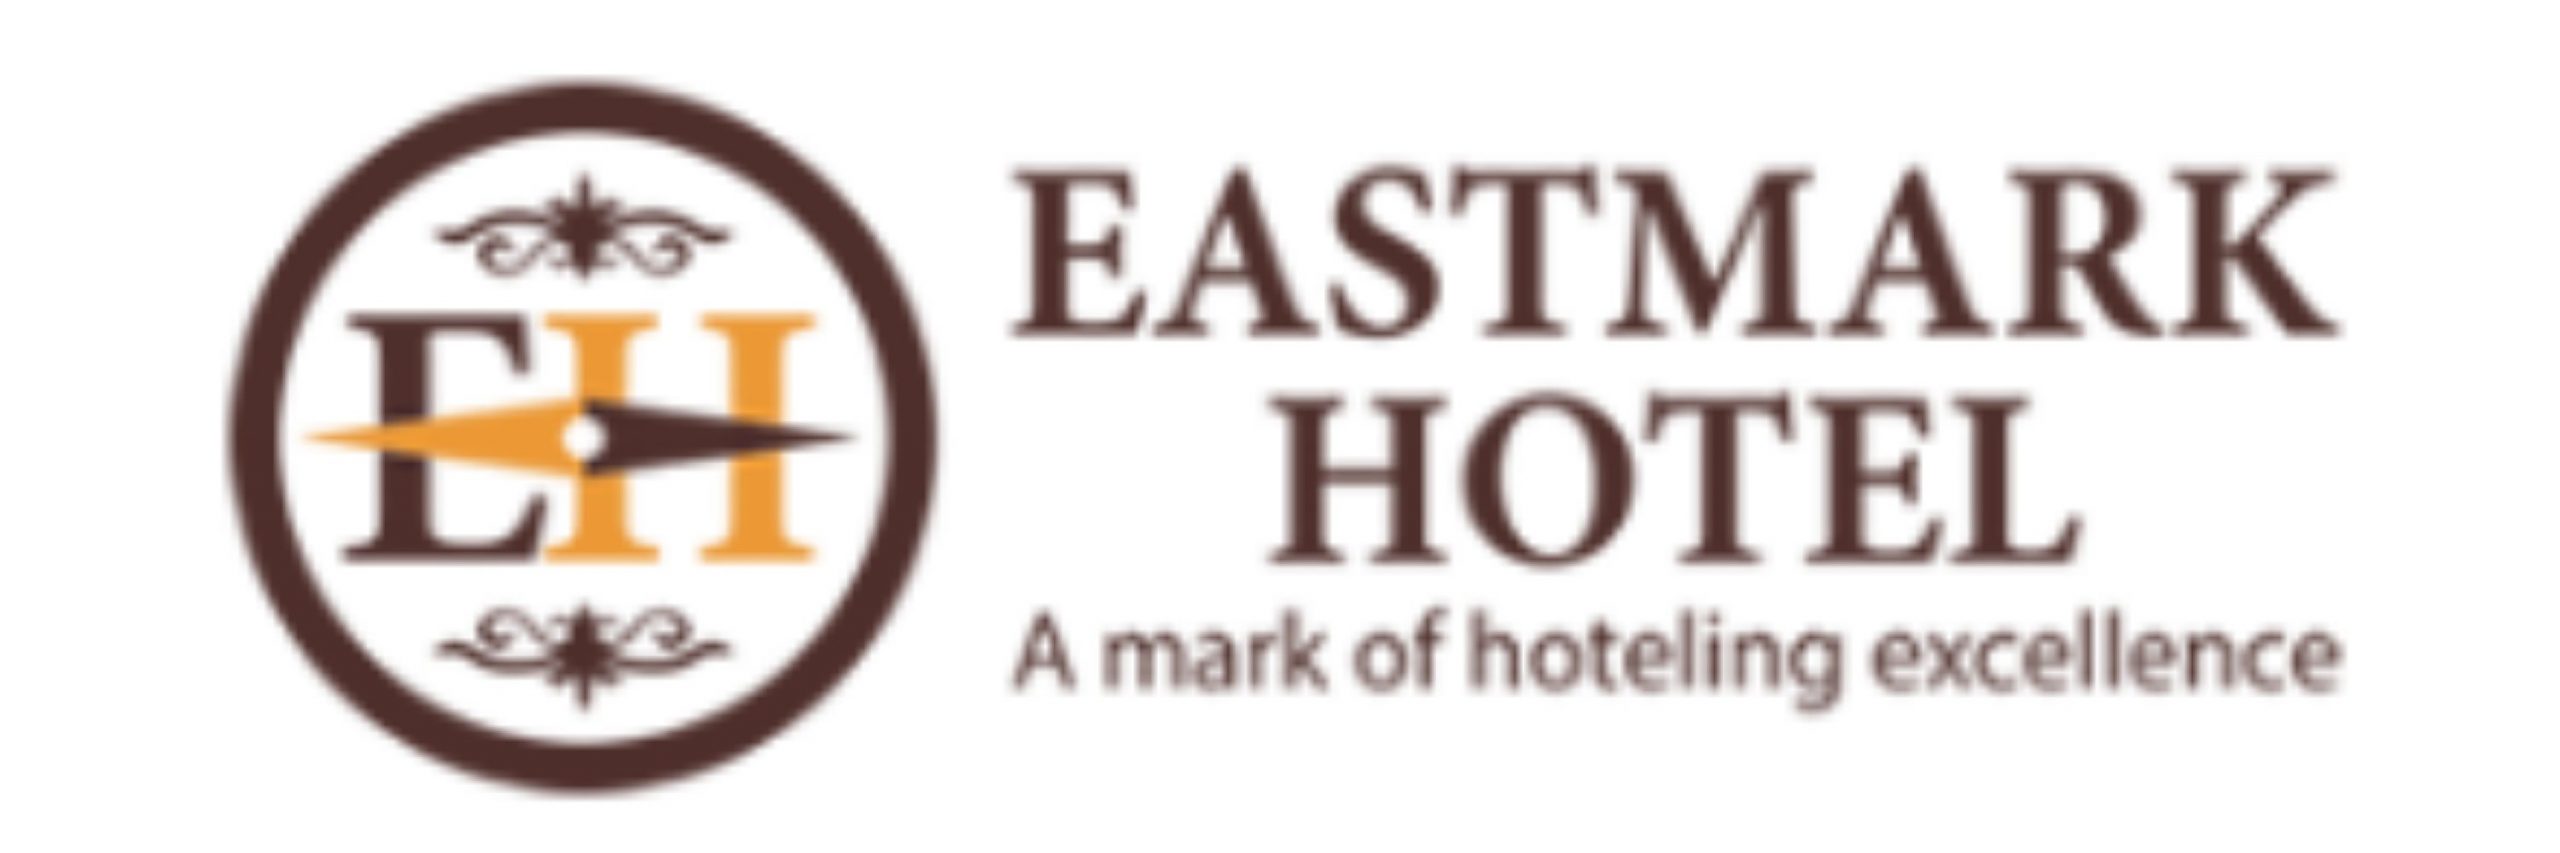 Eastmark Hotel |   Search